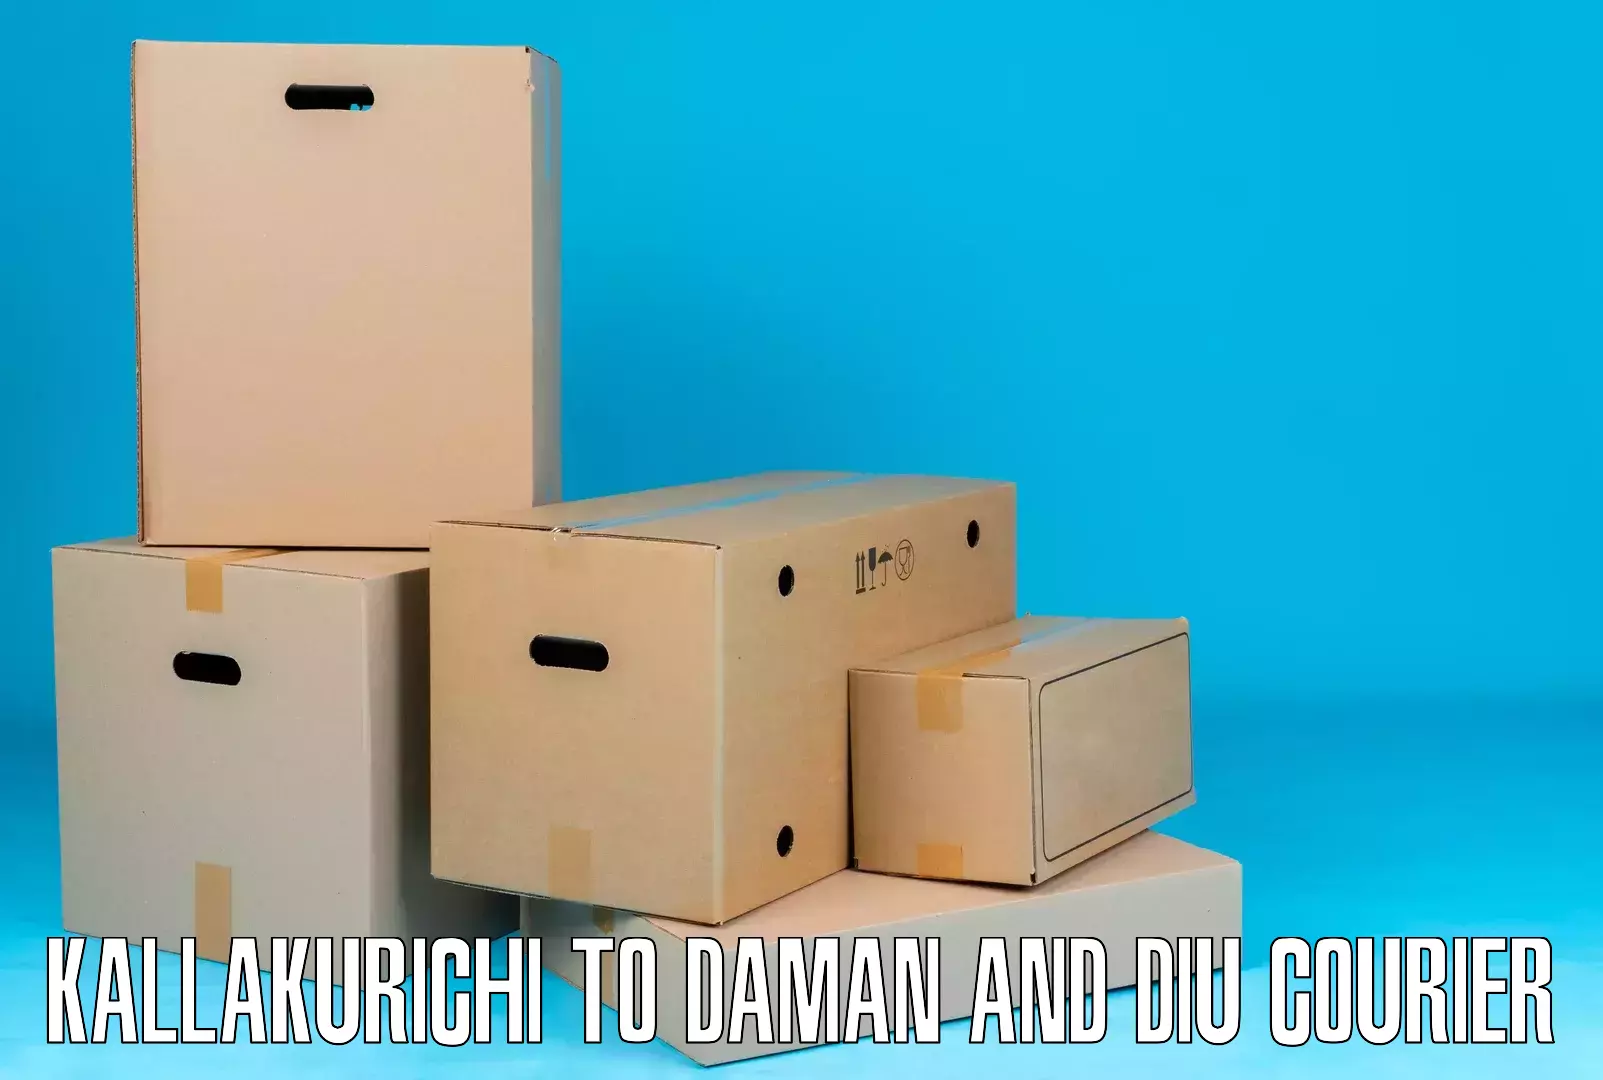 Large-scale shipping solutions Kallakurichi to Daman and Diu